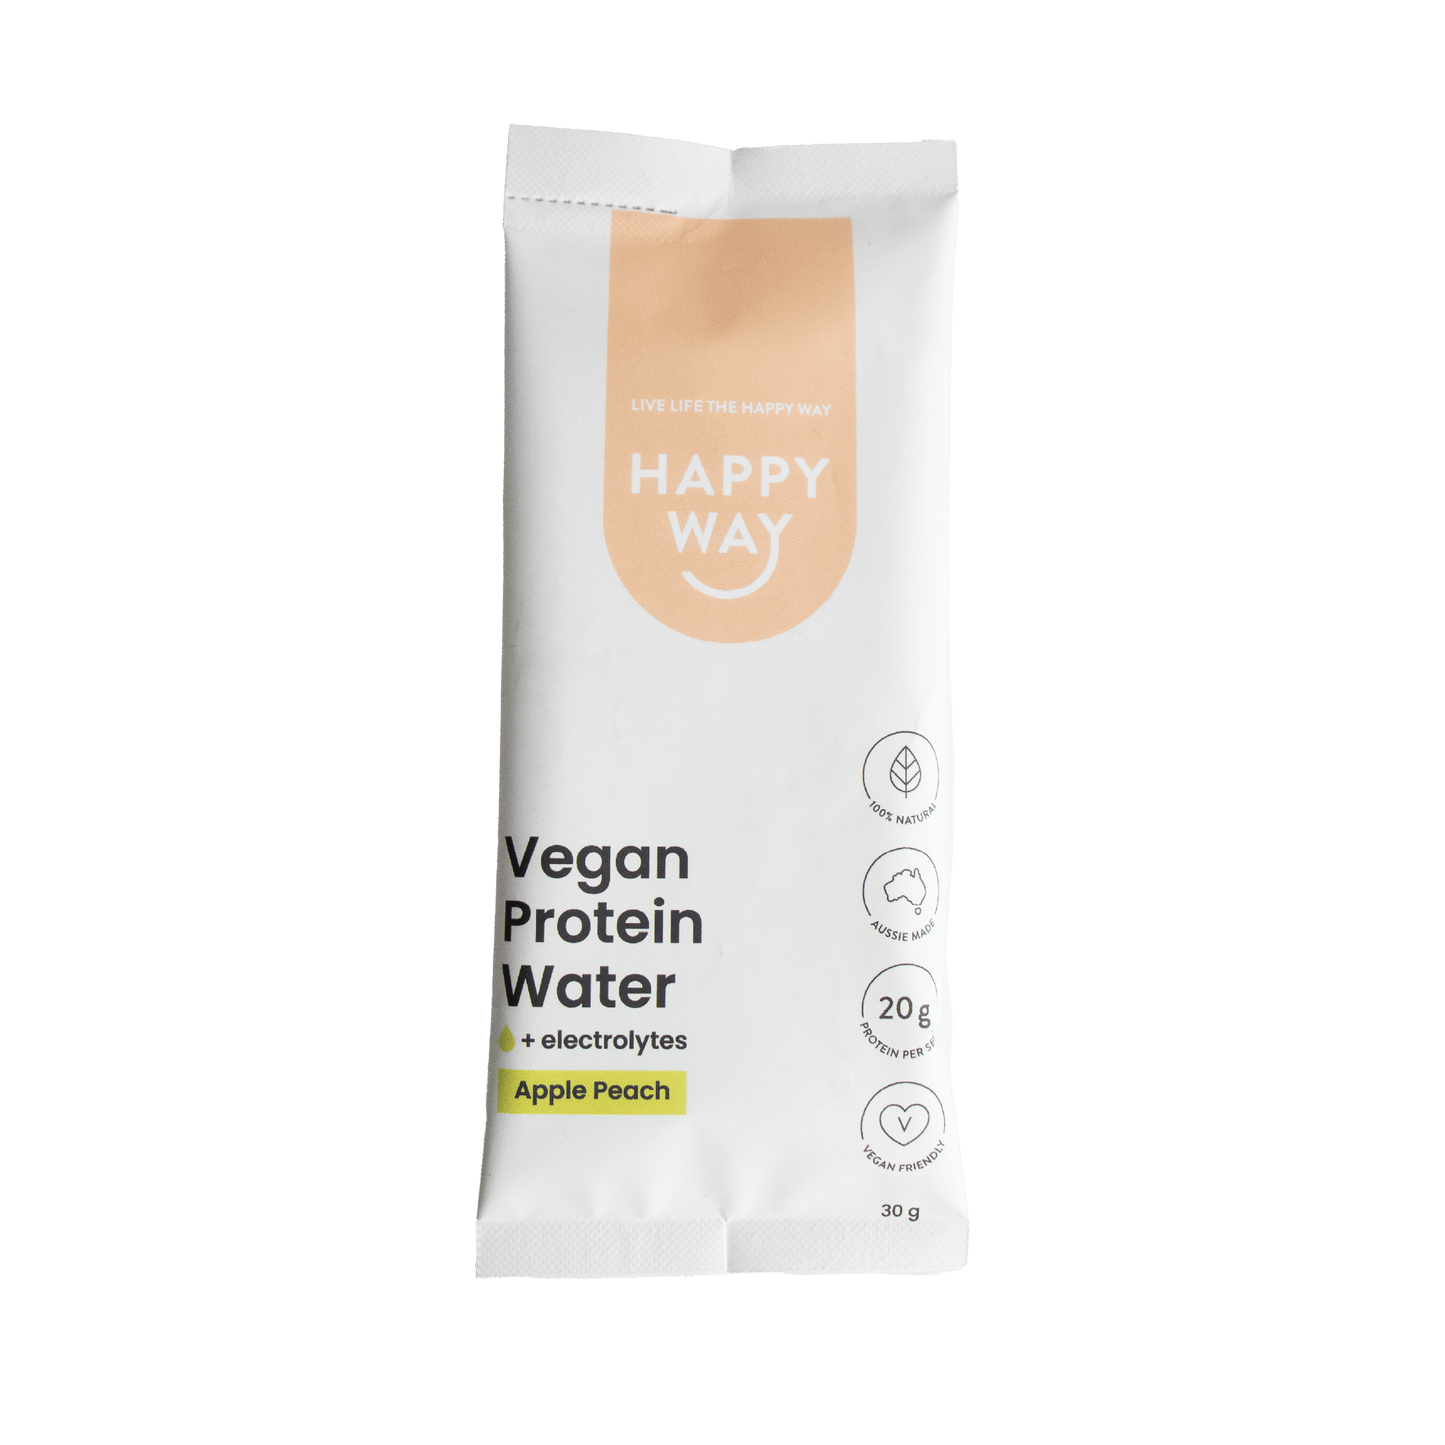 Vegan Protein Water Powder Sample Pack 30g